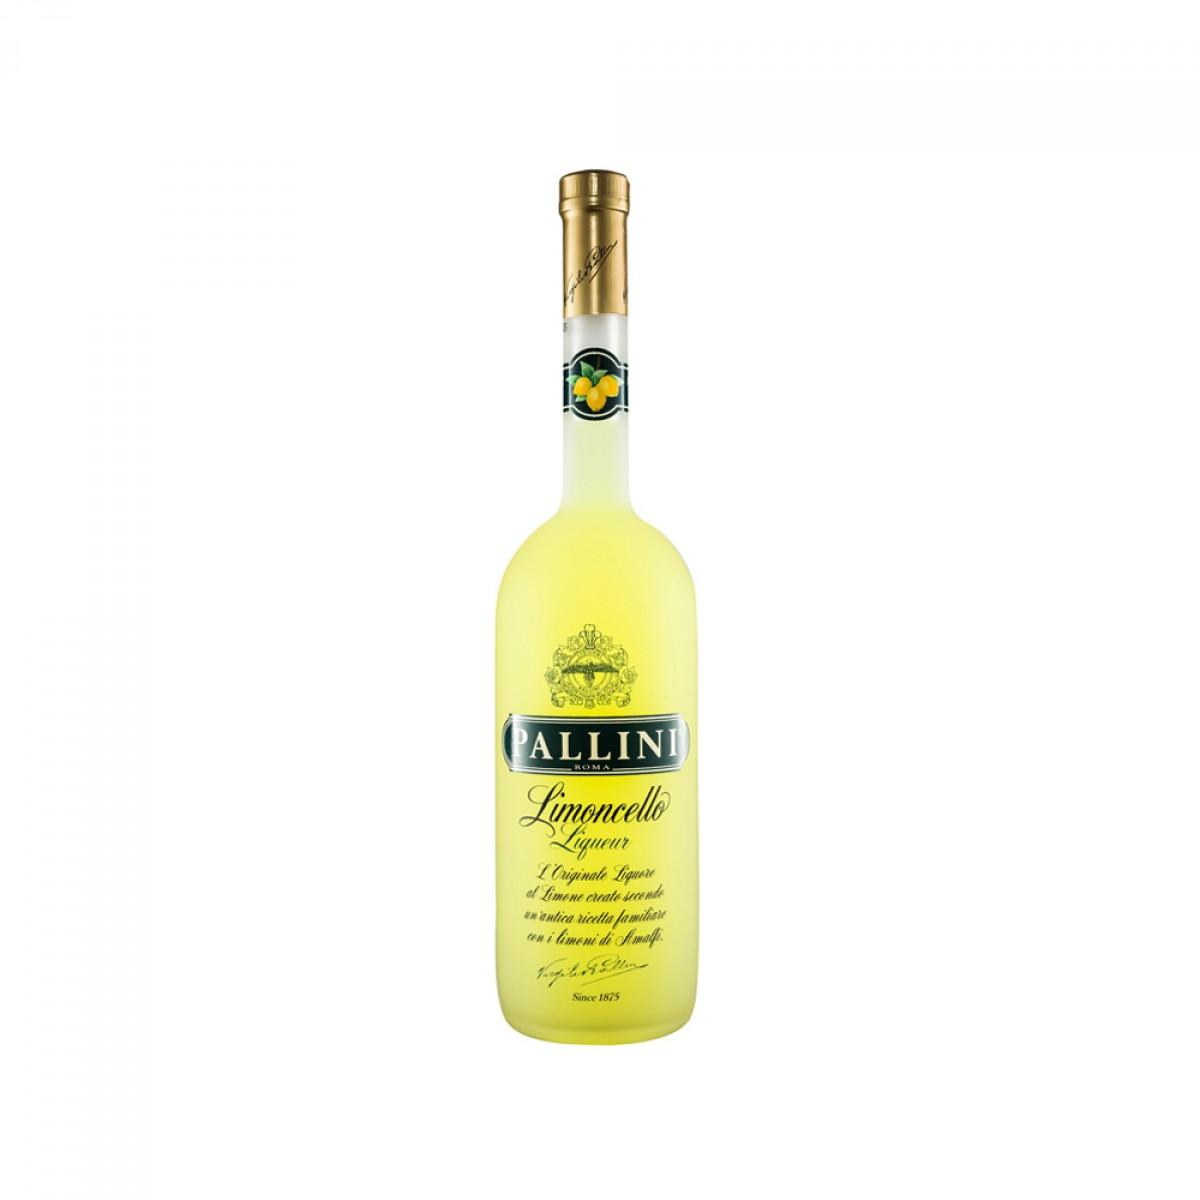 pallini-limoncello-26-aelia-duty-free-10-off-on-your-online-order